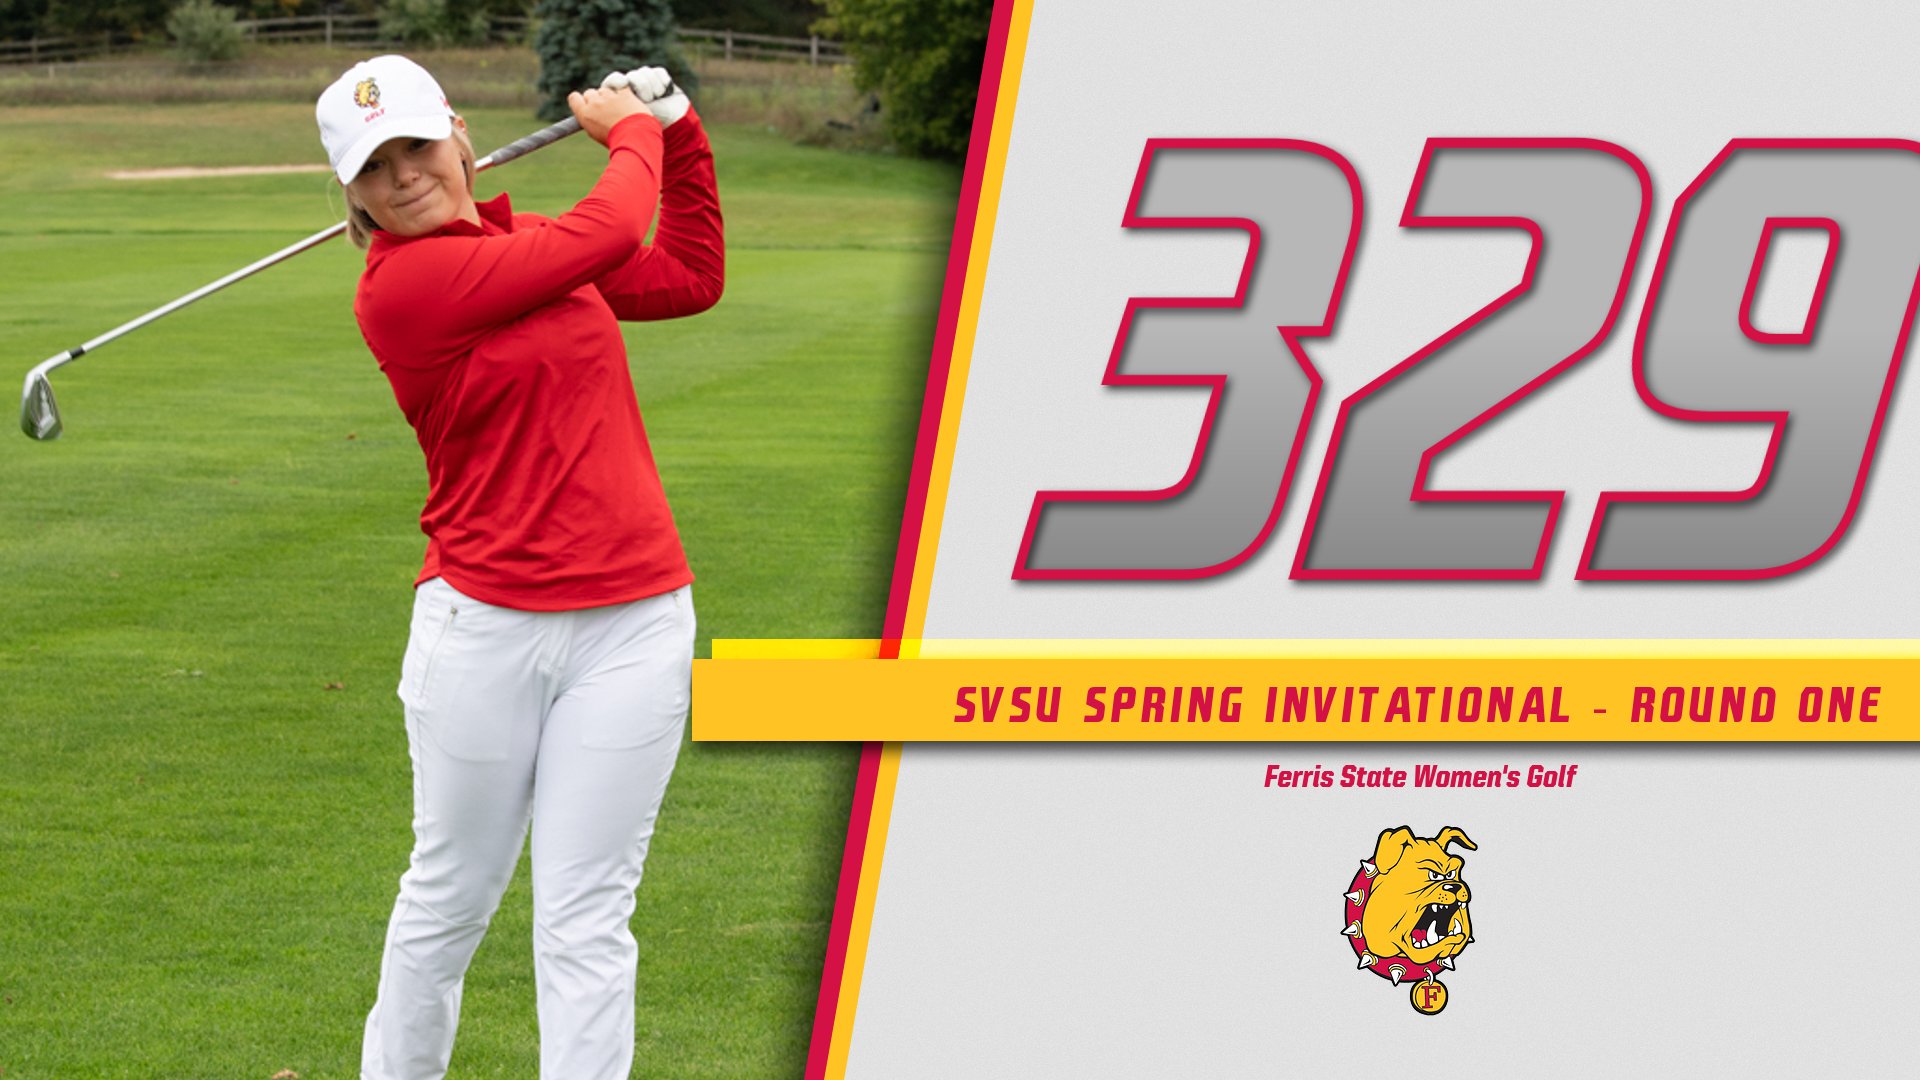 Ferris State Women's Golf Opens Campaign With 329 Score At SVSU Spring Invite